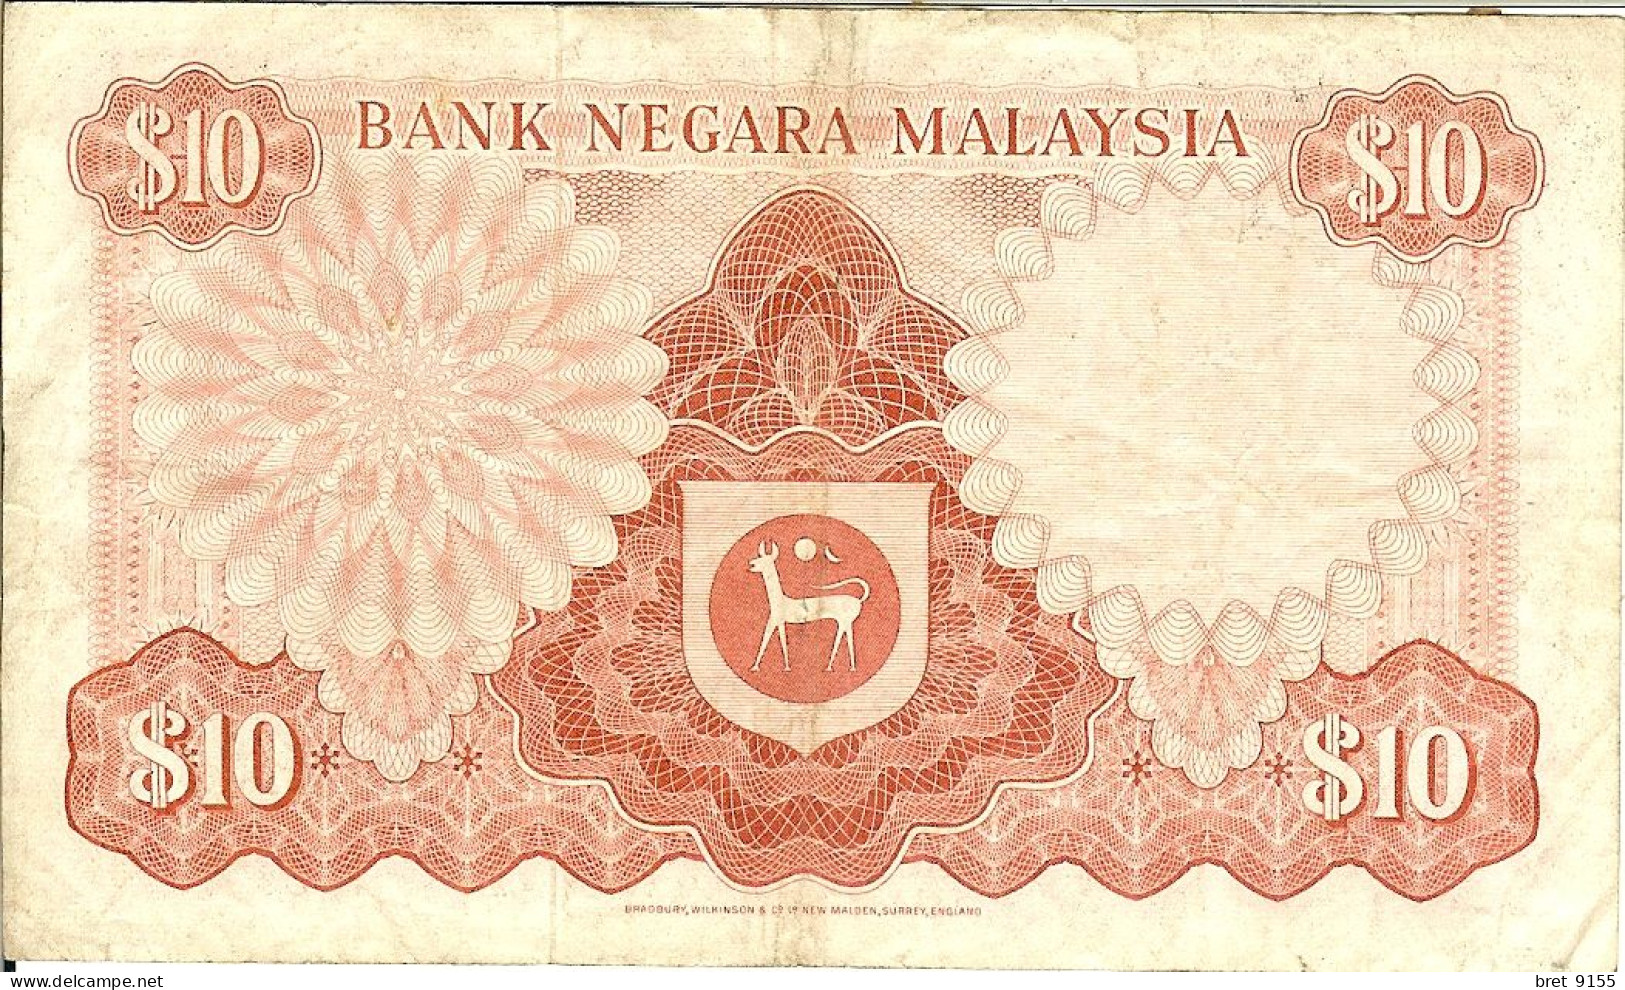 BILLET 10 ASIE MALAYSIE BANK NEGARA MALAYSIA SEPULUH RINGGIT - Andere - Azië